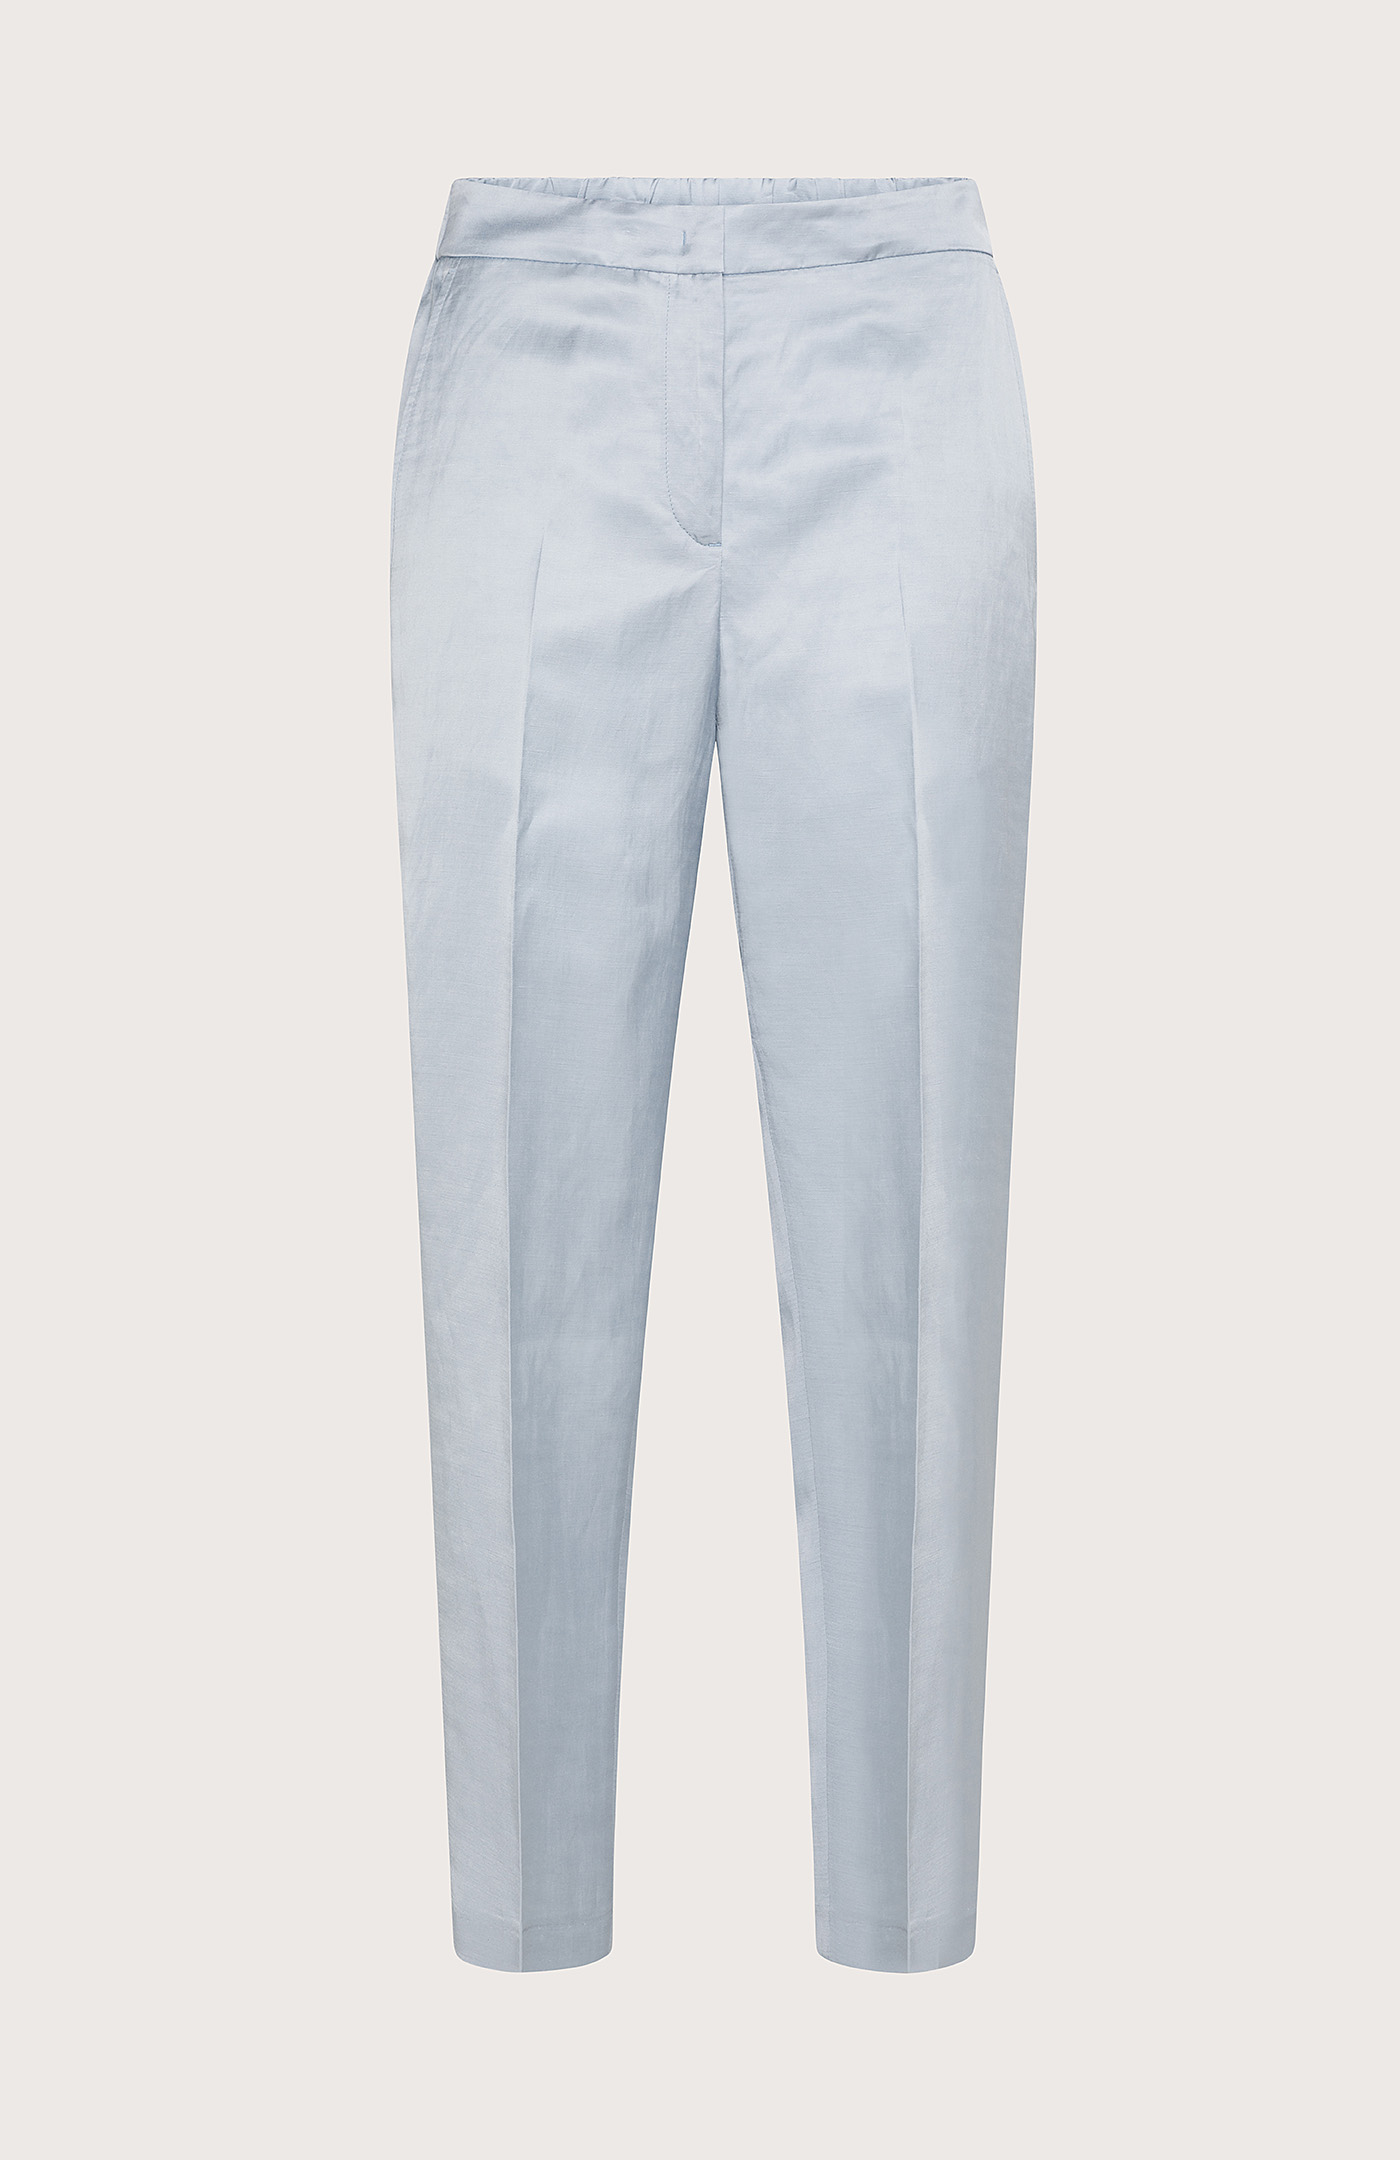 Cordera Cotton and Wool Carrot Pants - Navy | Garmentory